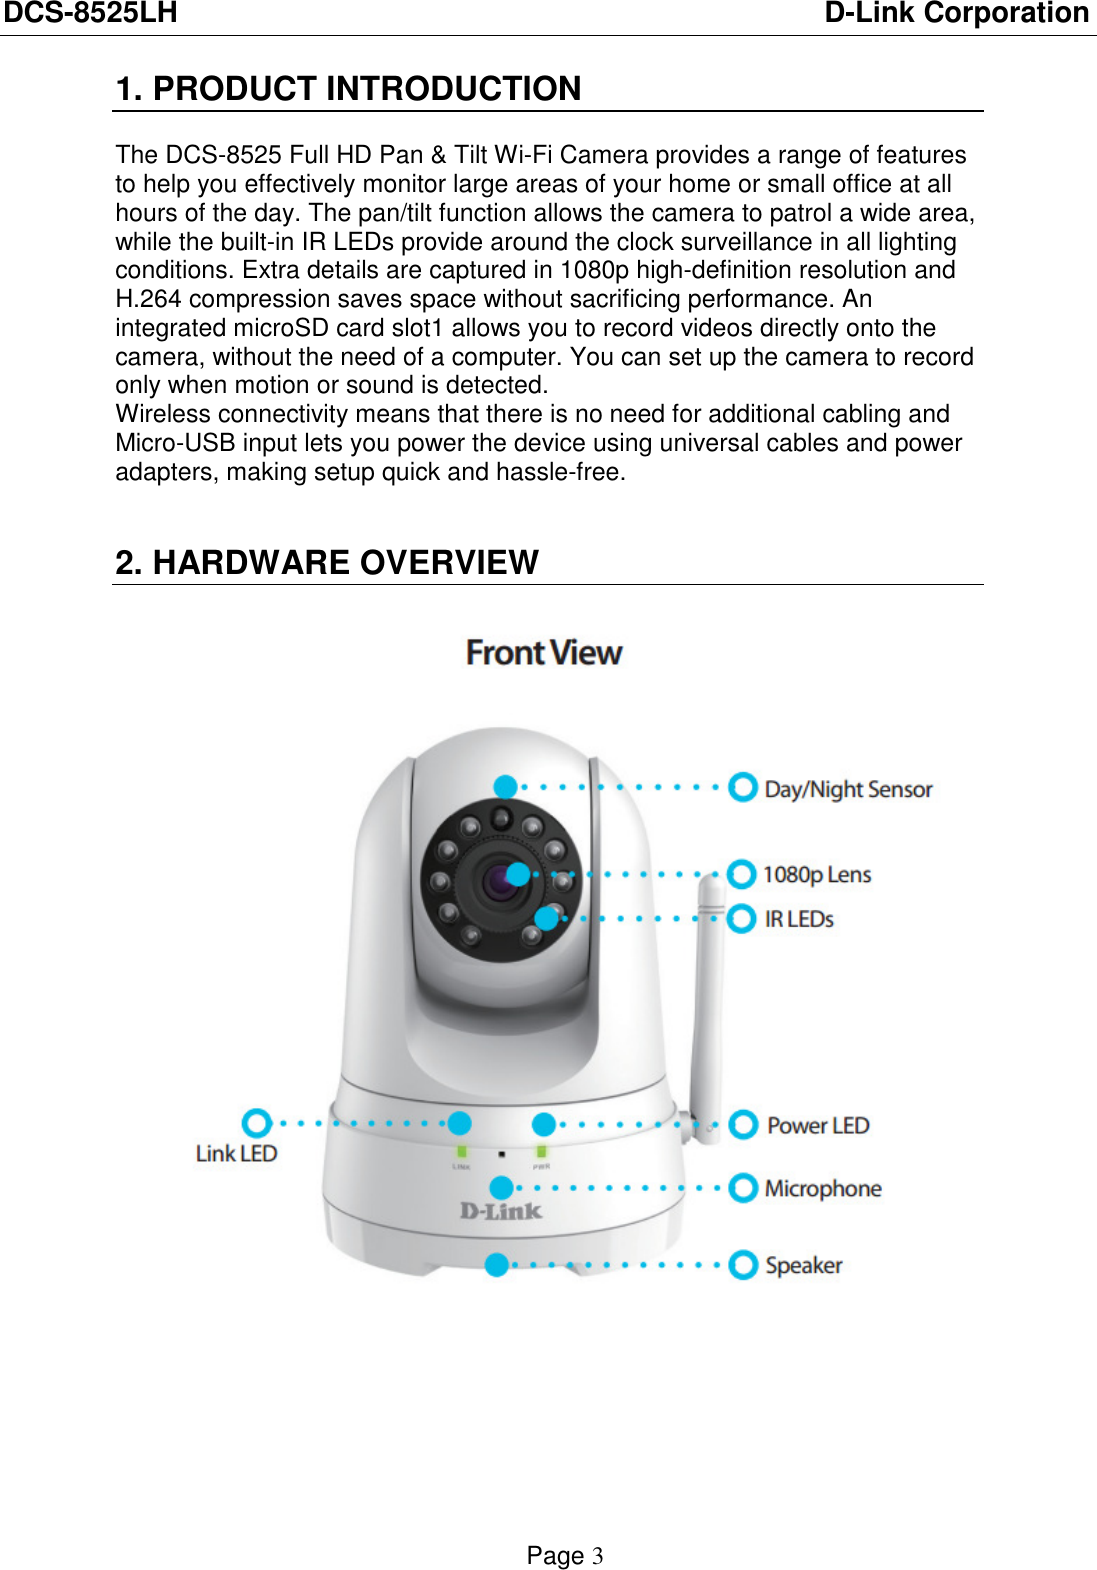 Page 3 of D Link CS8525LHA1 Full HD Pan & Tilt Wi-Fi Camera User Manual 